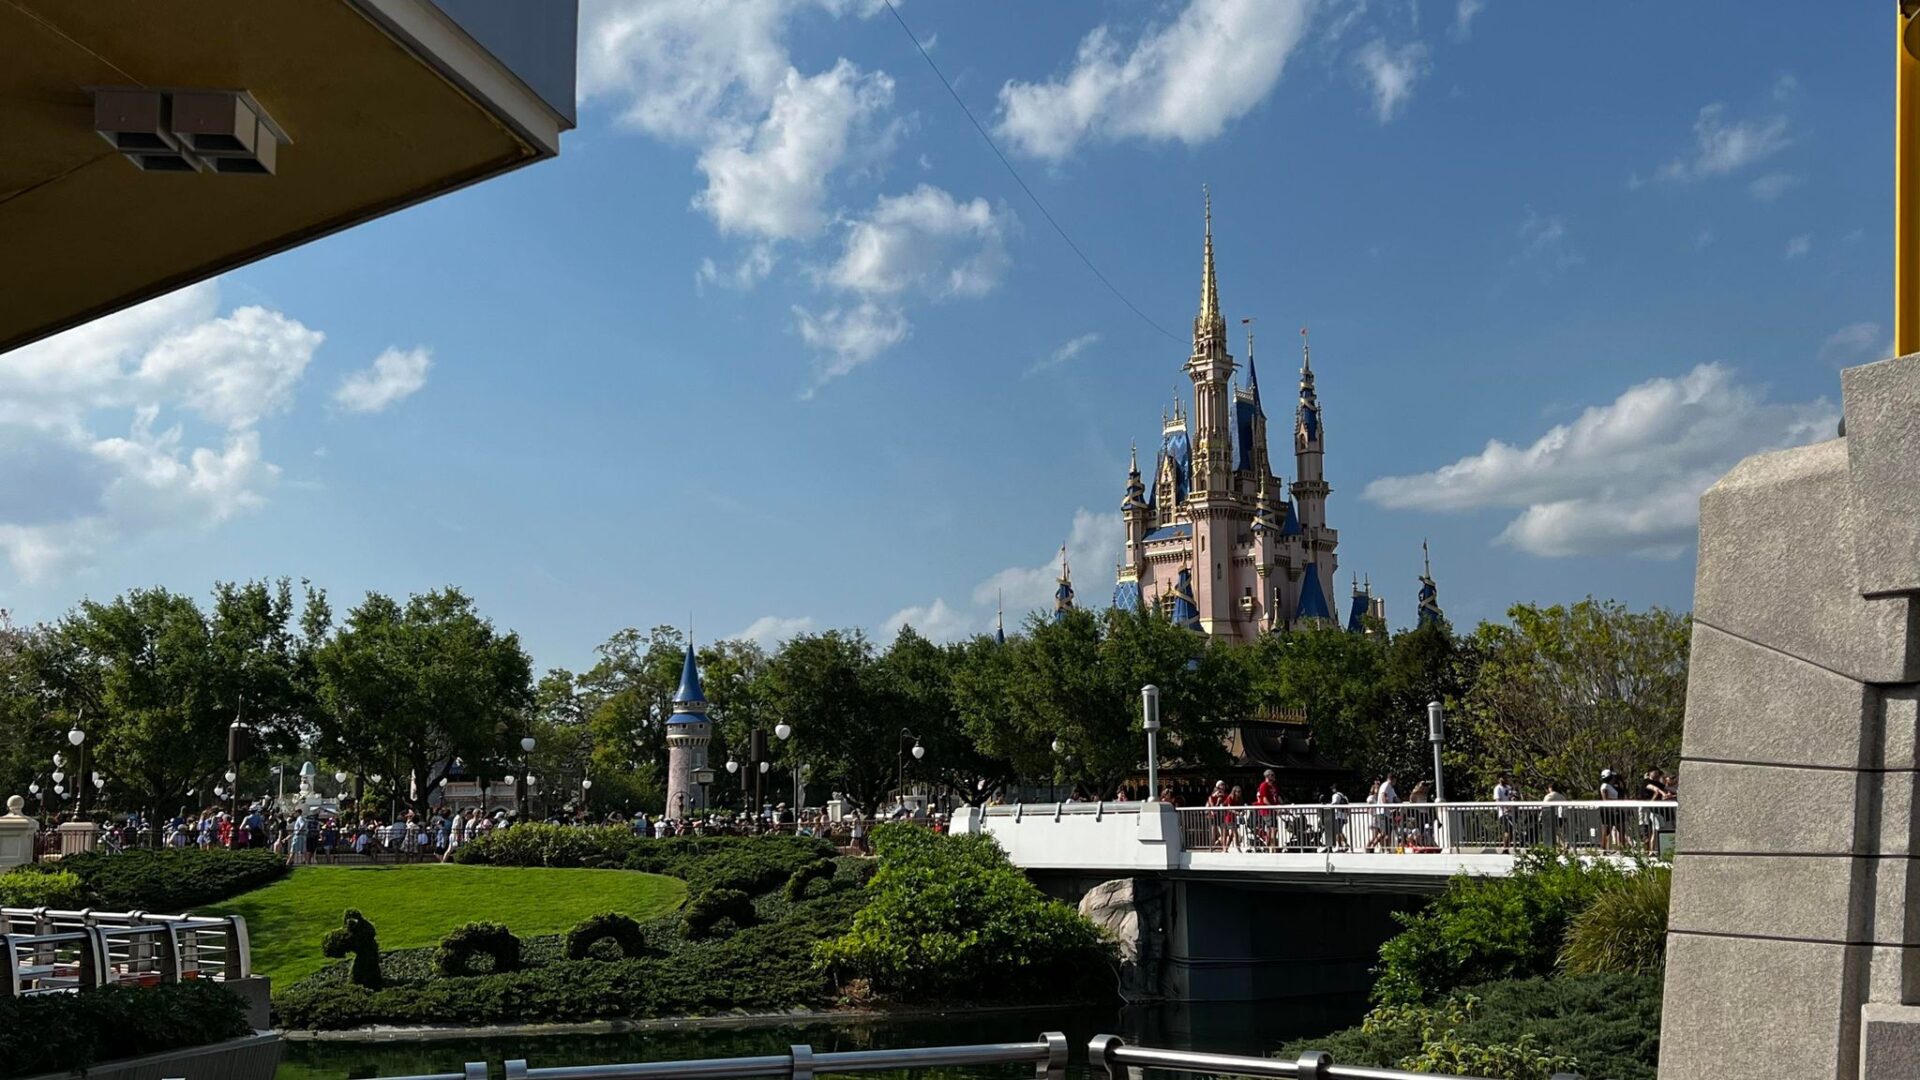 50th Anniversary Decorations Being Taken Down in Disney World’s Magic Kingdom